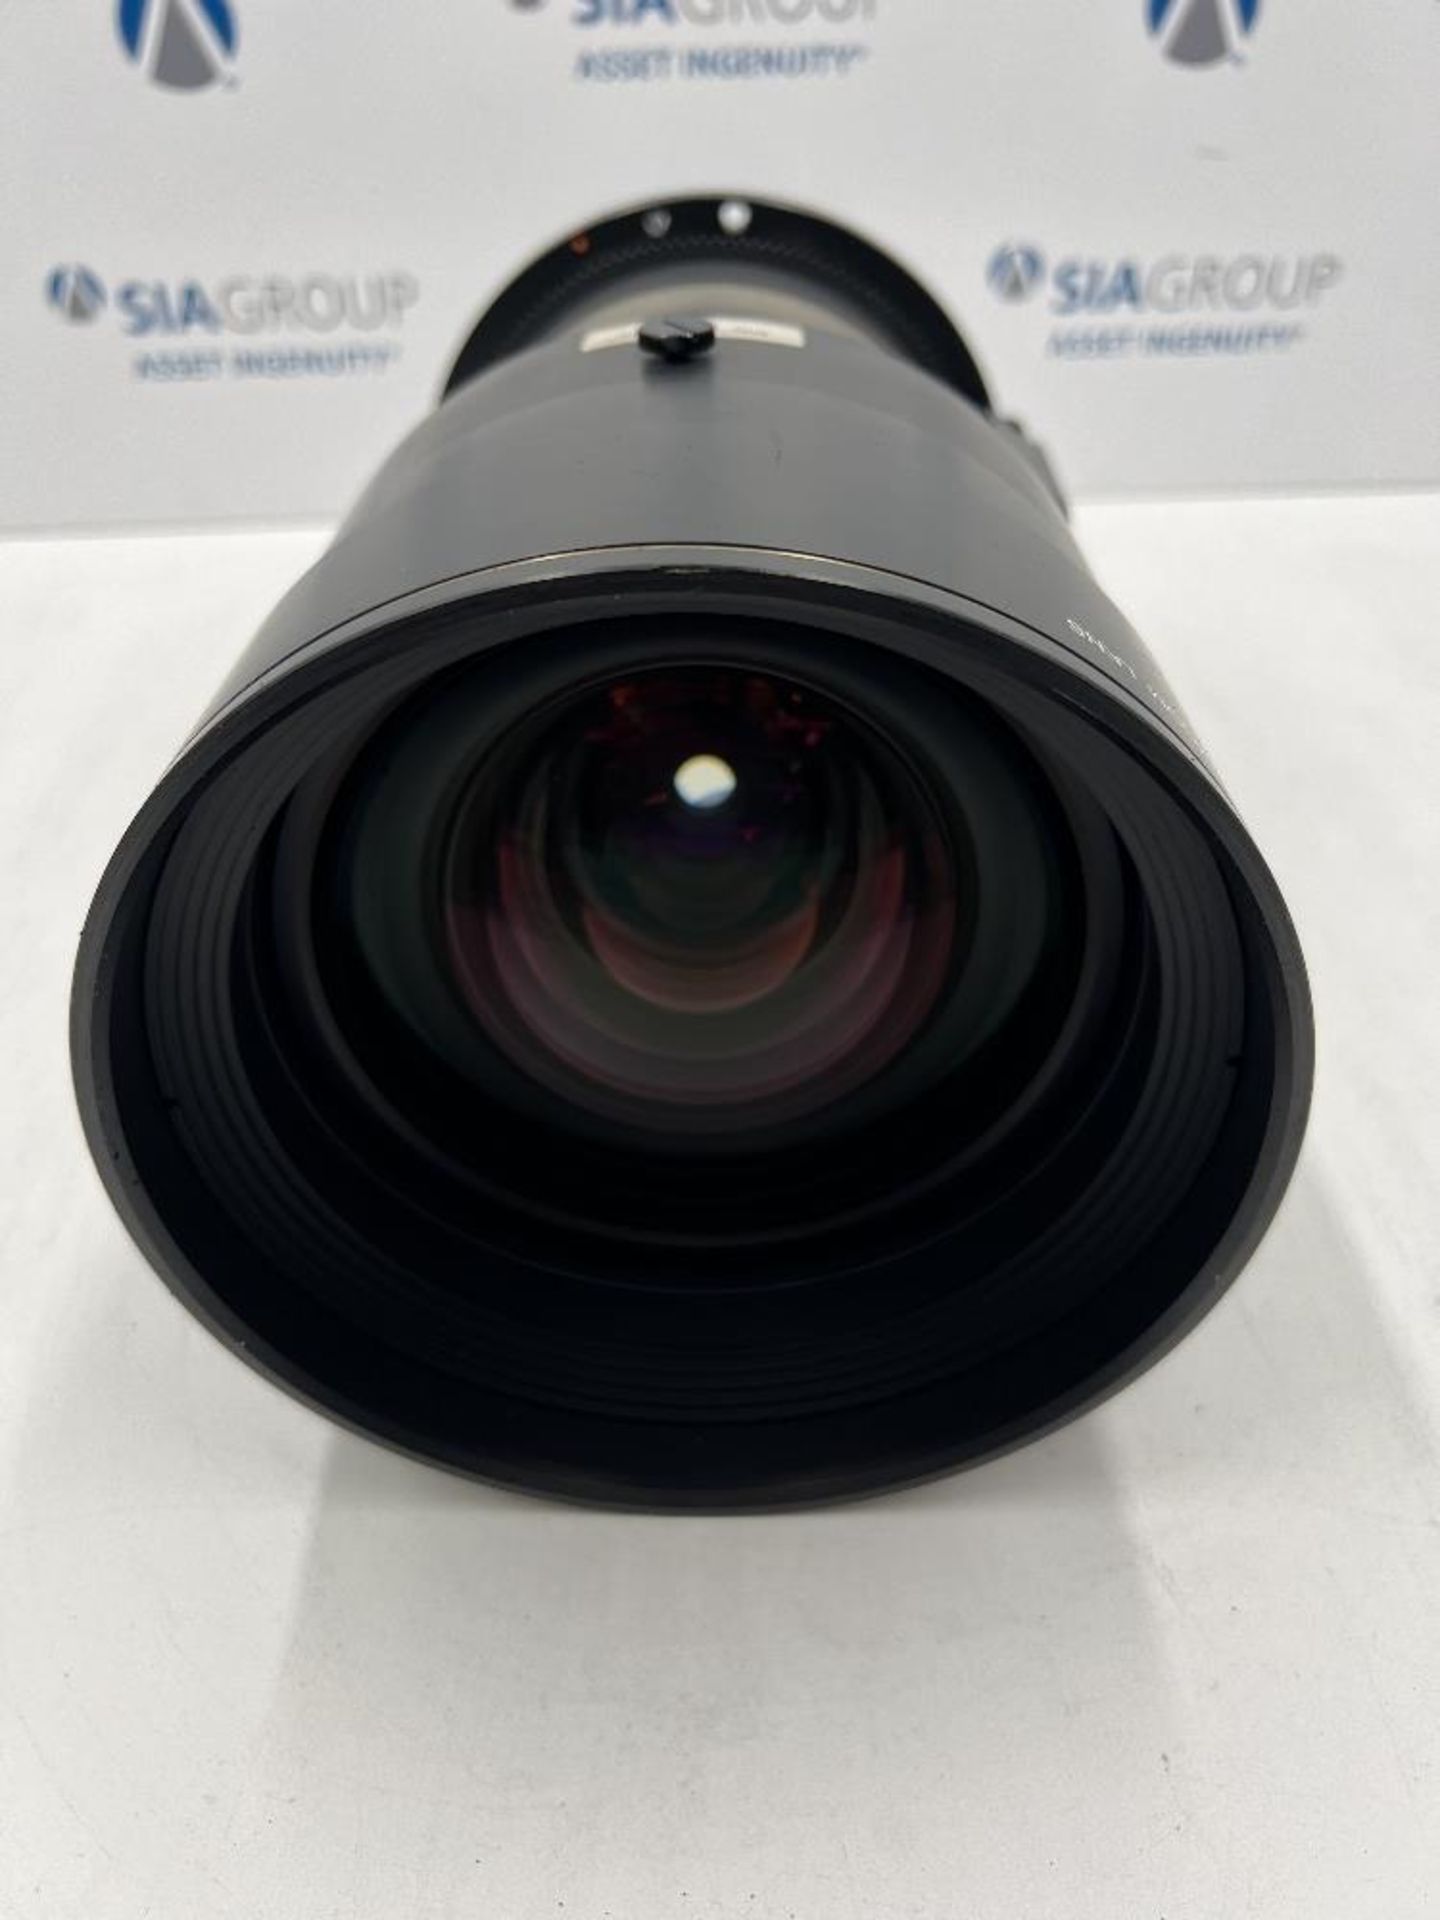 Panasonic ET-D75LE6 0.9-1.1 Zoom Lens With Carrier Case - Image 7 of 10